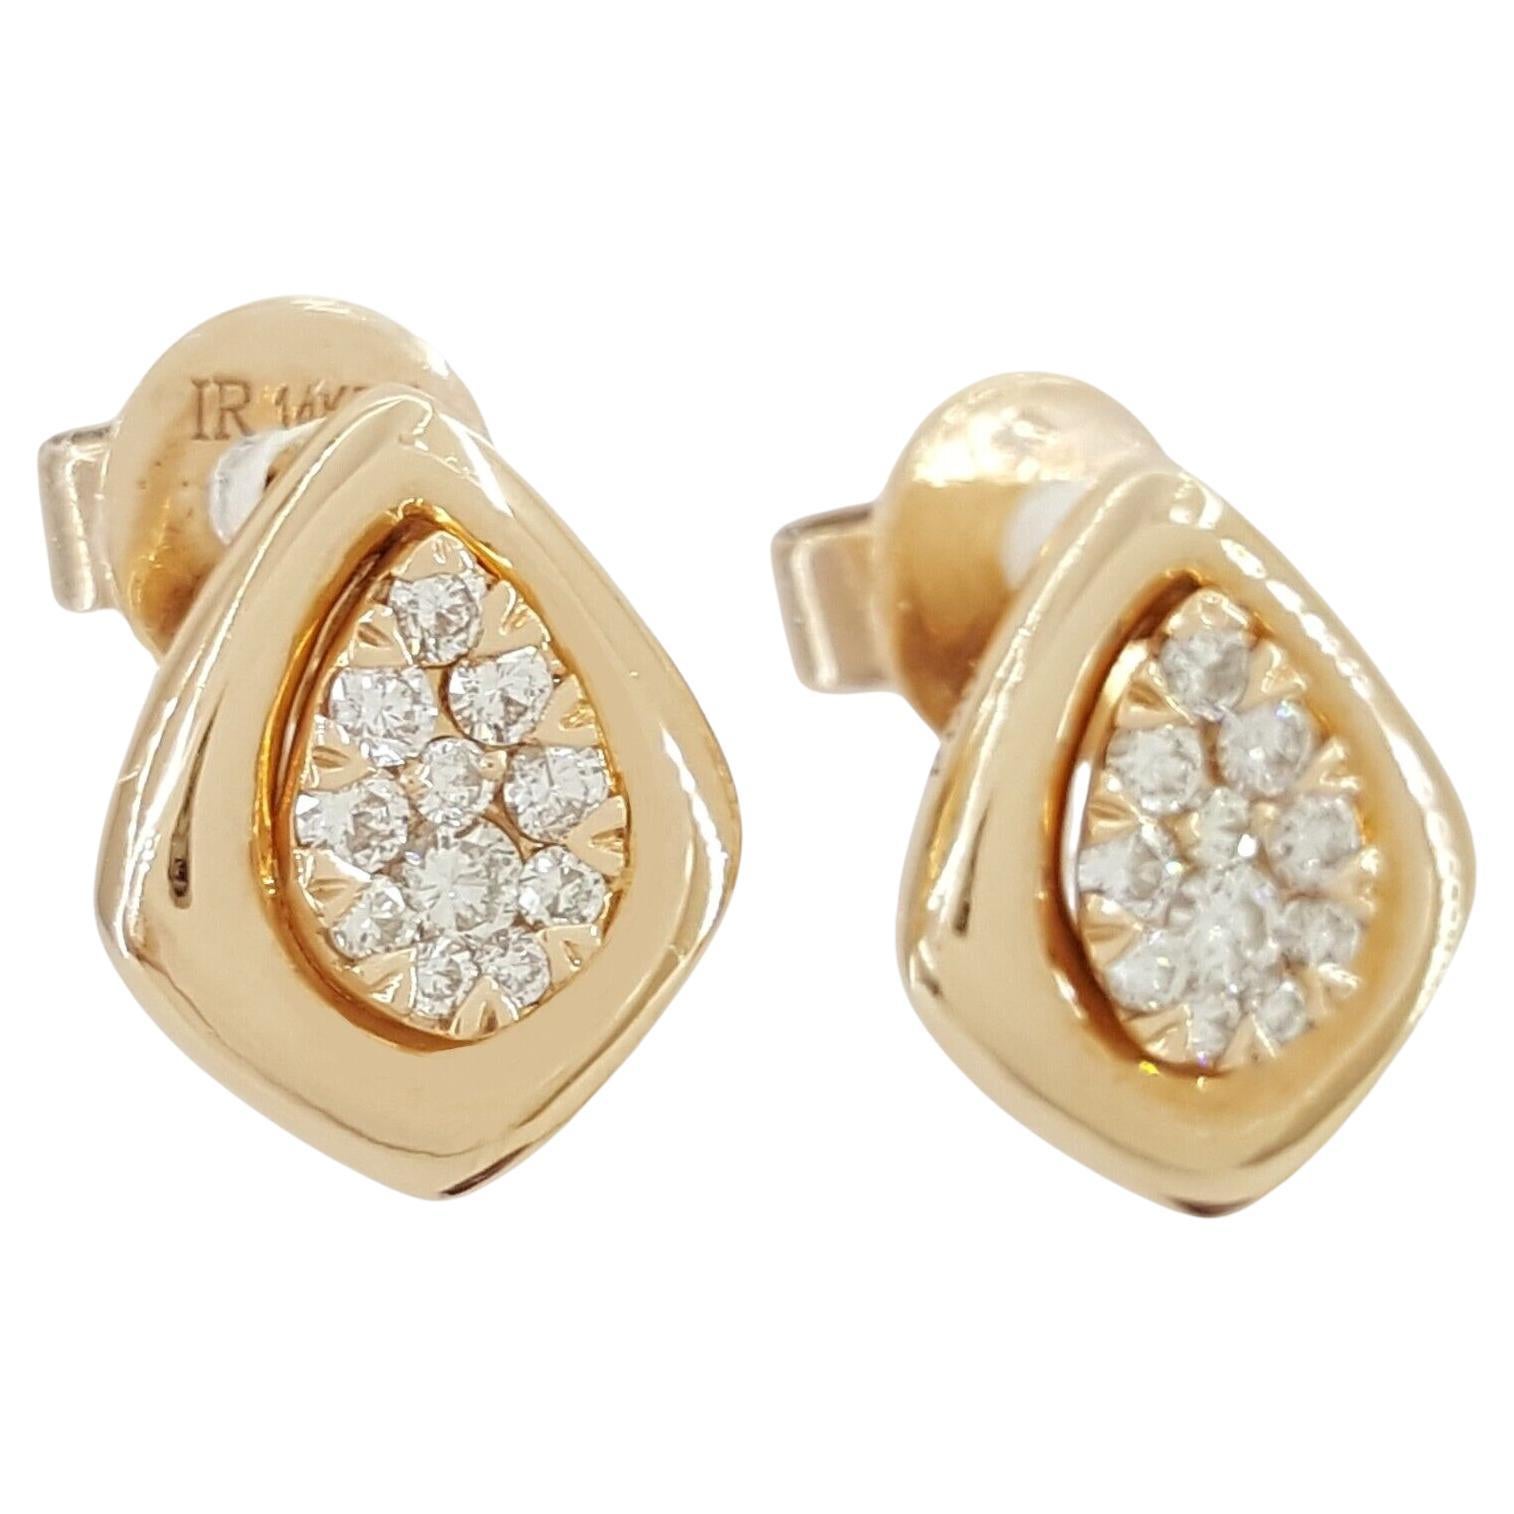 Round Brilliant Cut Diamond Stud Earrings in 14k Rose Gold